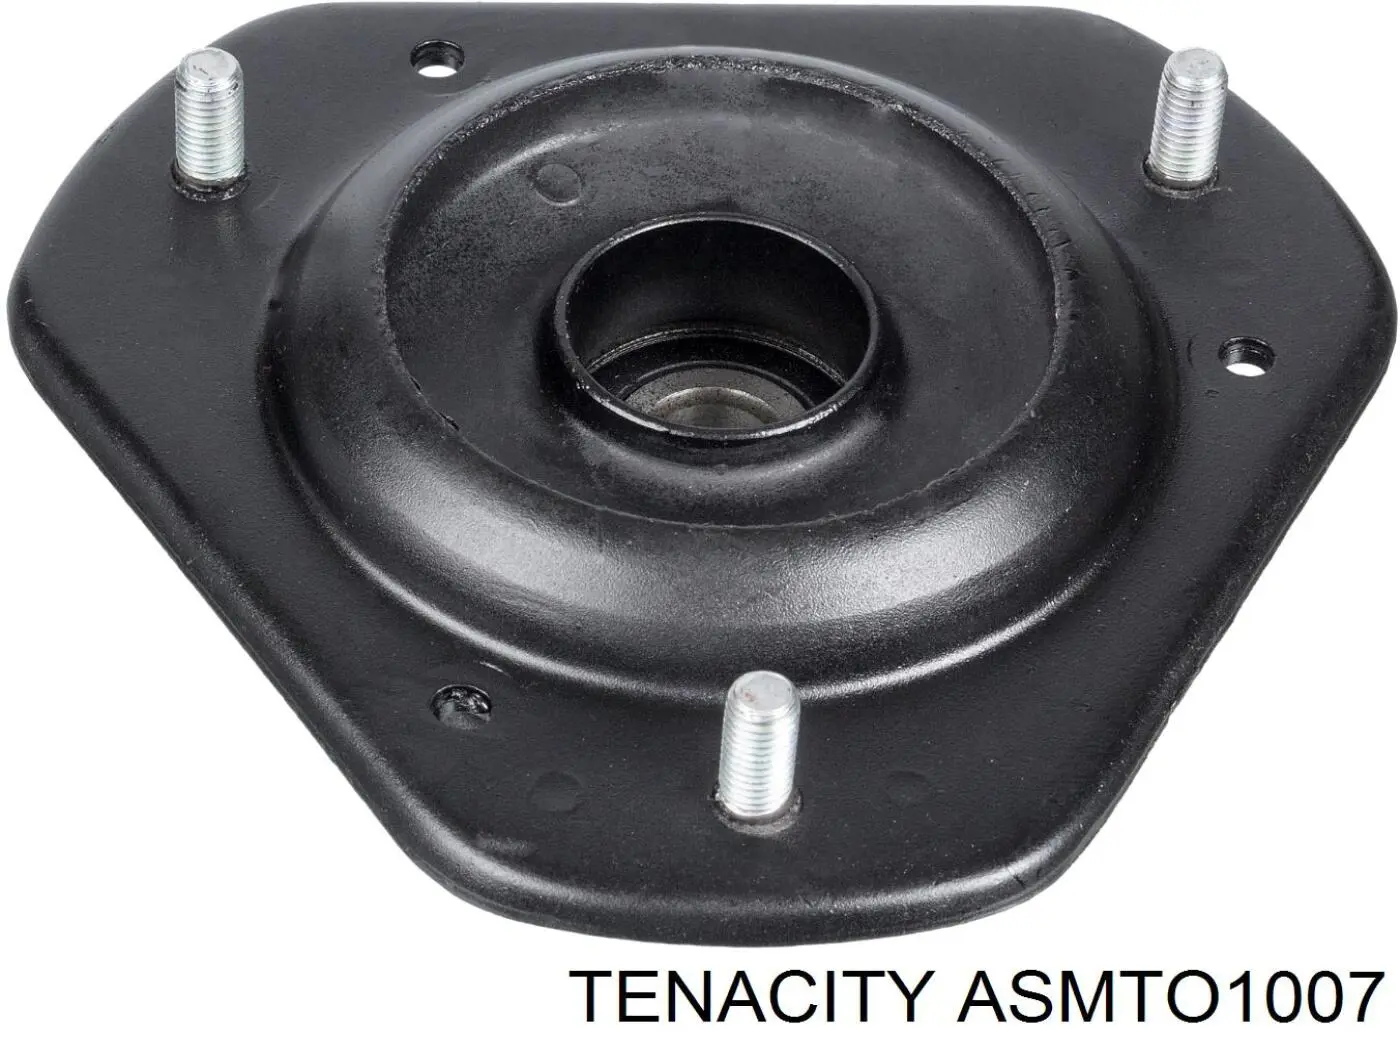 ASMTO1007 Tenacity suporte de amortecedor dianteiro